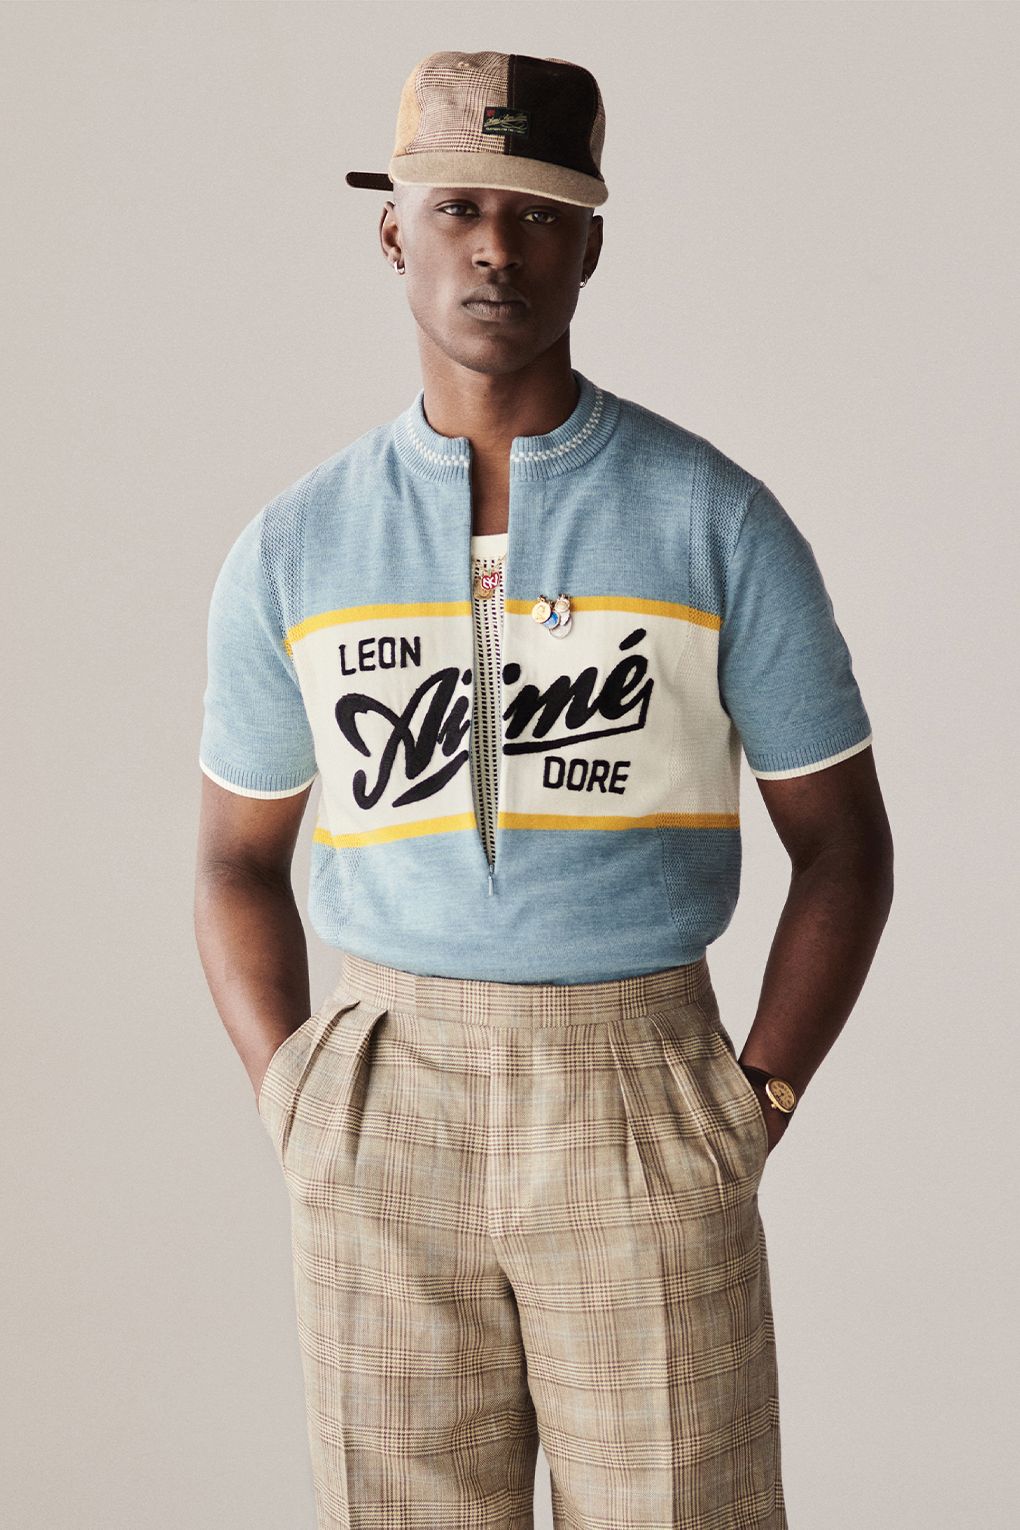 New Aime Leon Dore caps 🧢 #ald #aimeleondore #streetwear